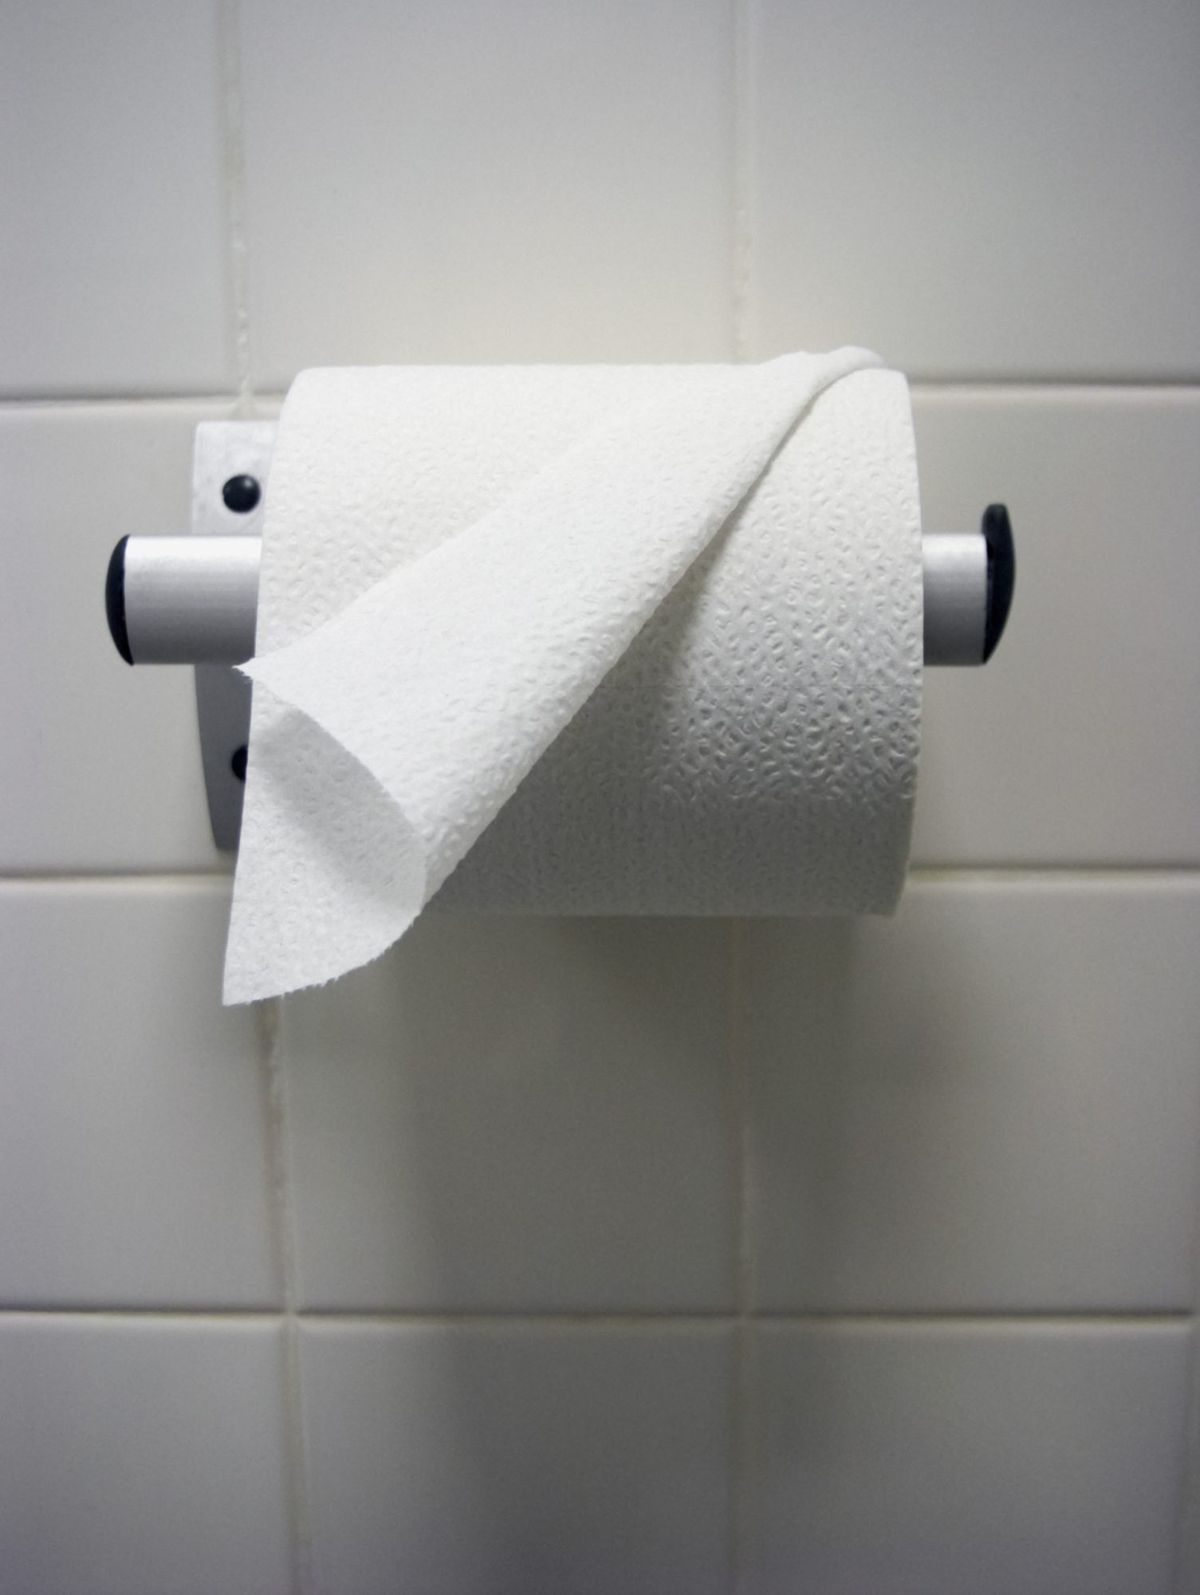 07-problem-peeing-cervical-cancer-toilet-paper